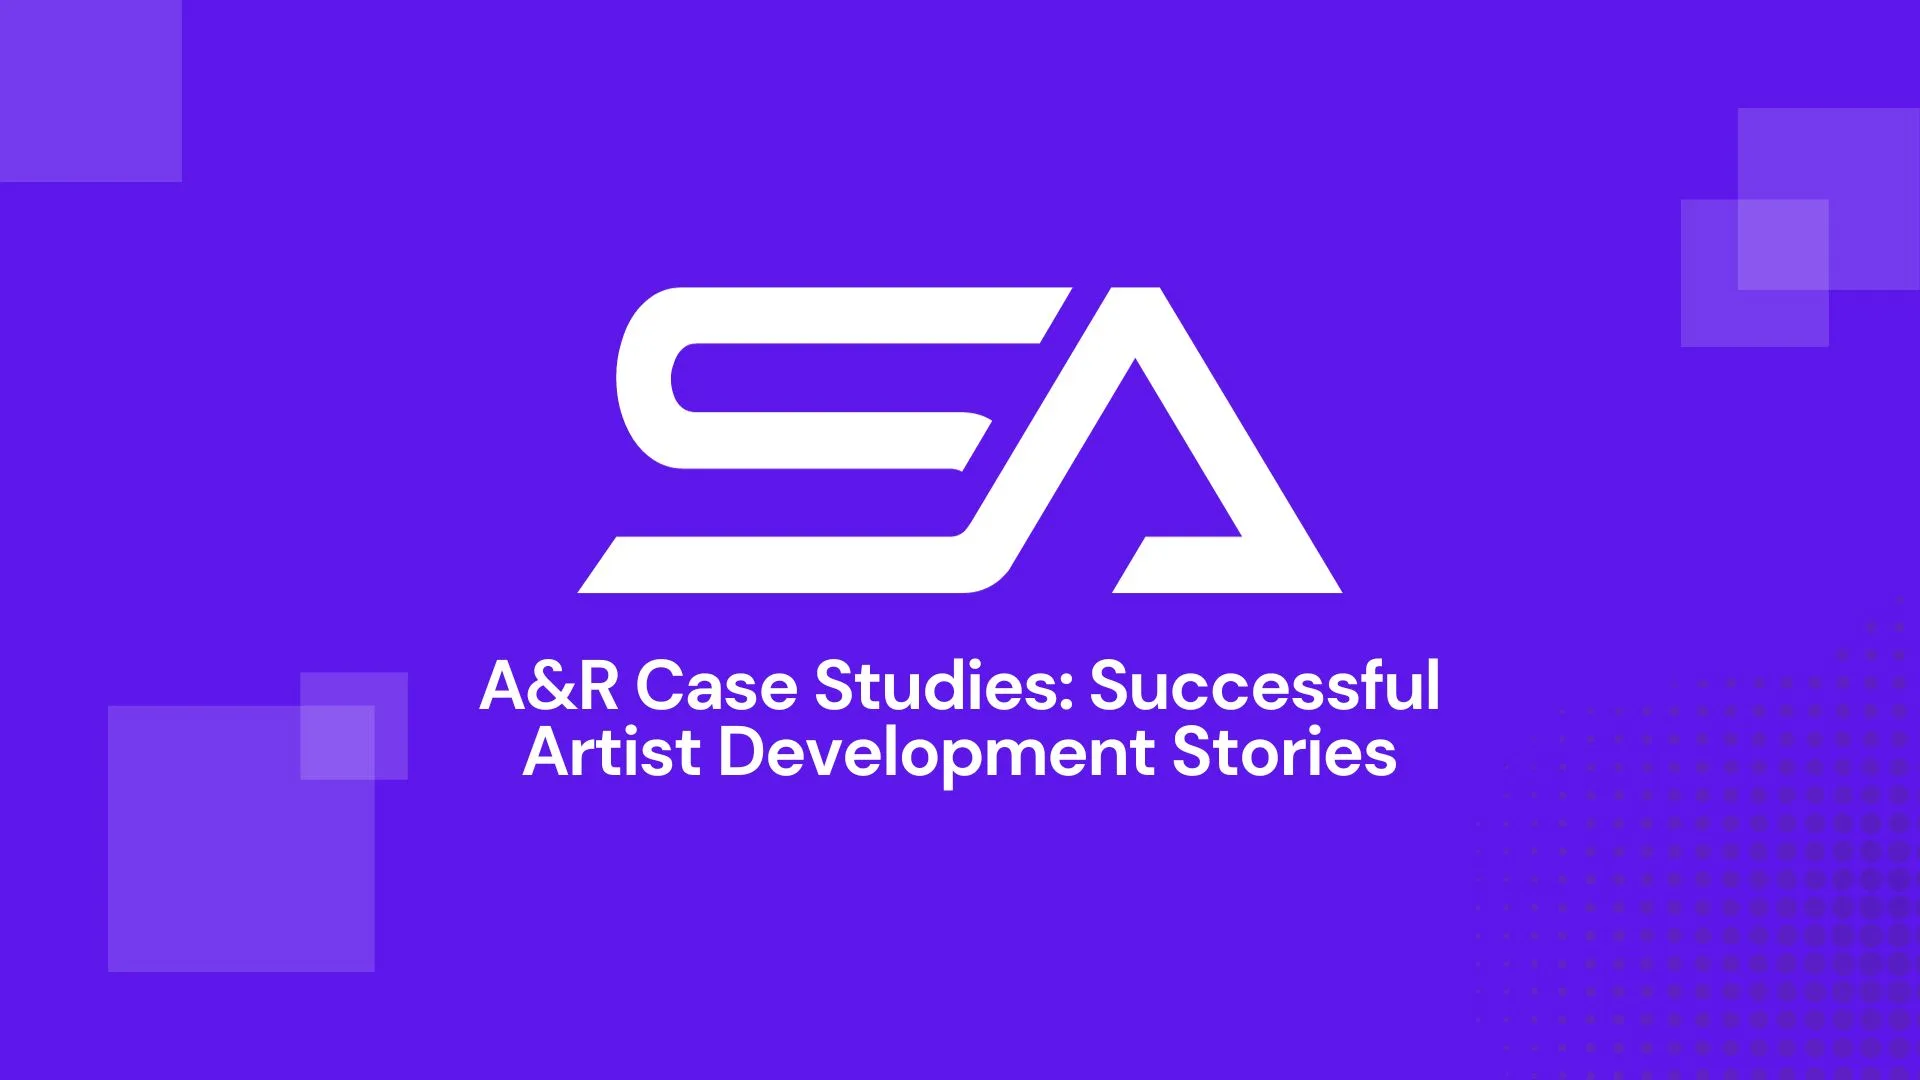 A&R Case Studies: Successful Artist Development Stories